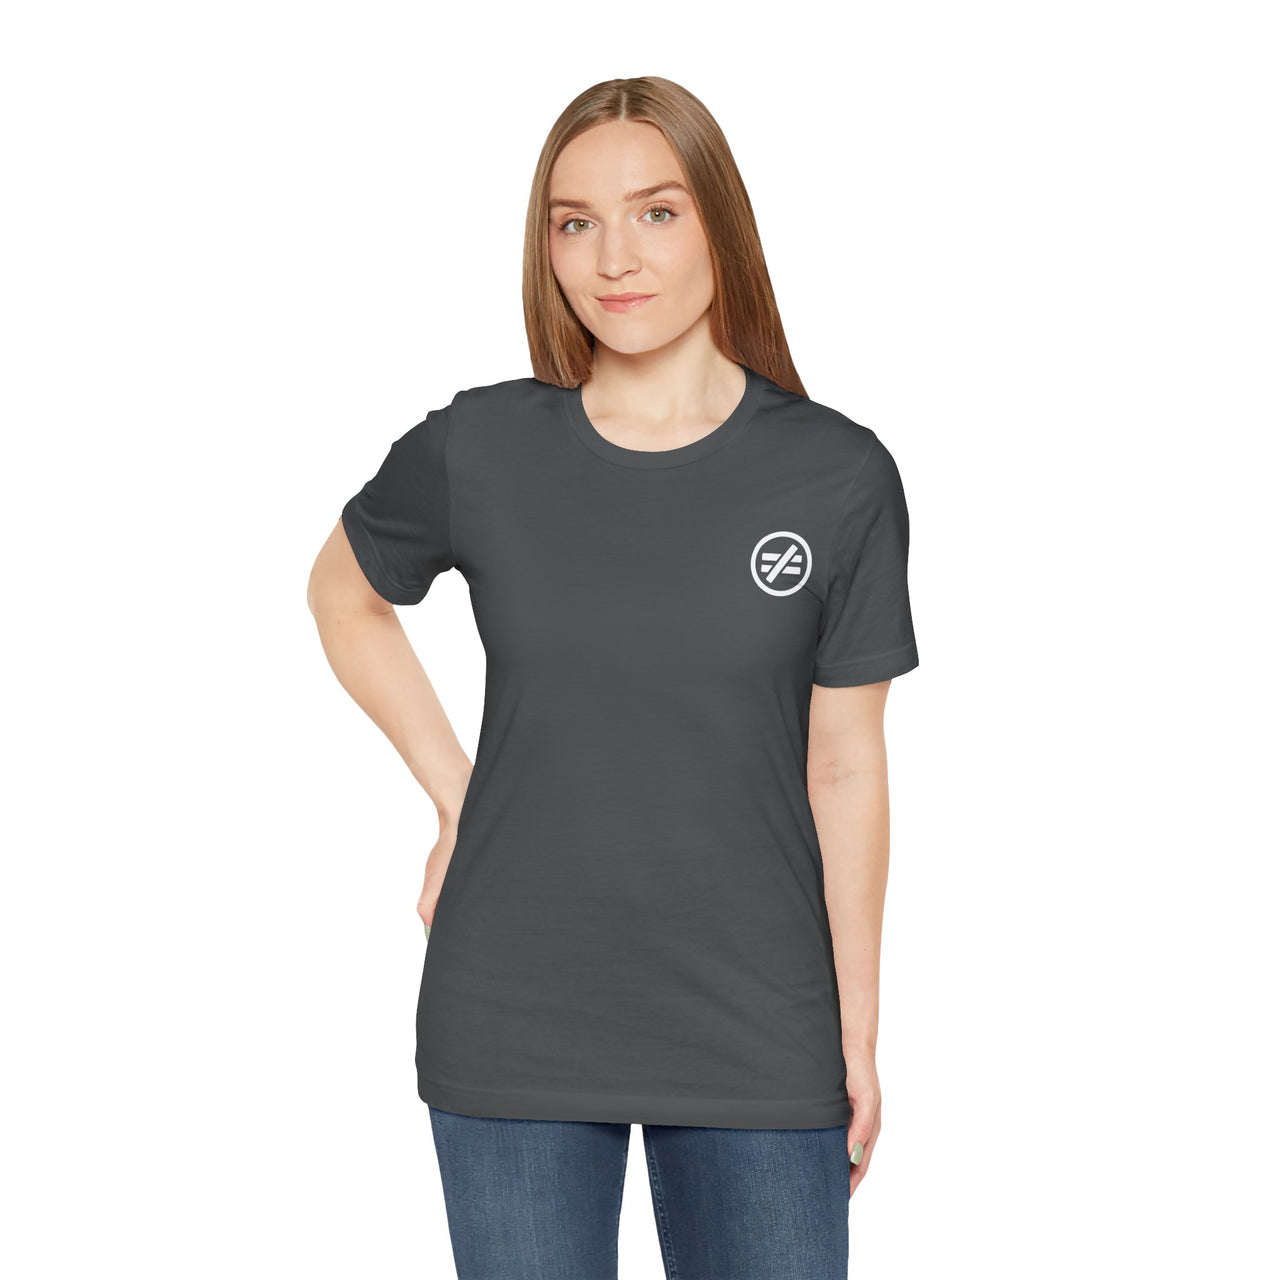 Camiseta unisex oscura "No es igual a", Camiseta para matemáticos